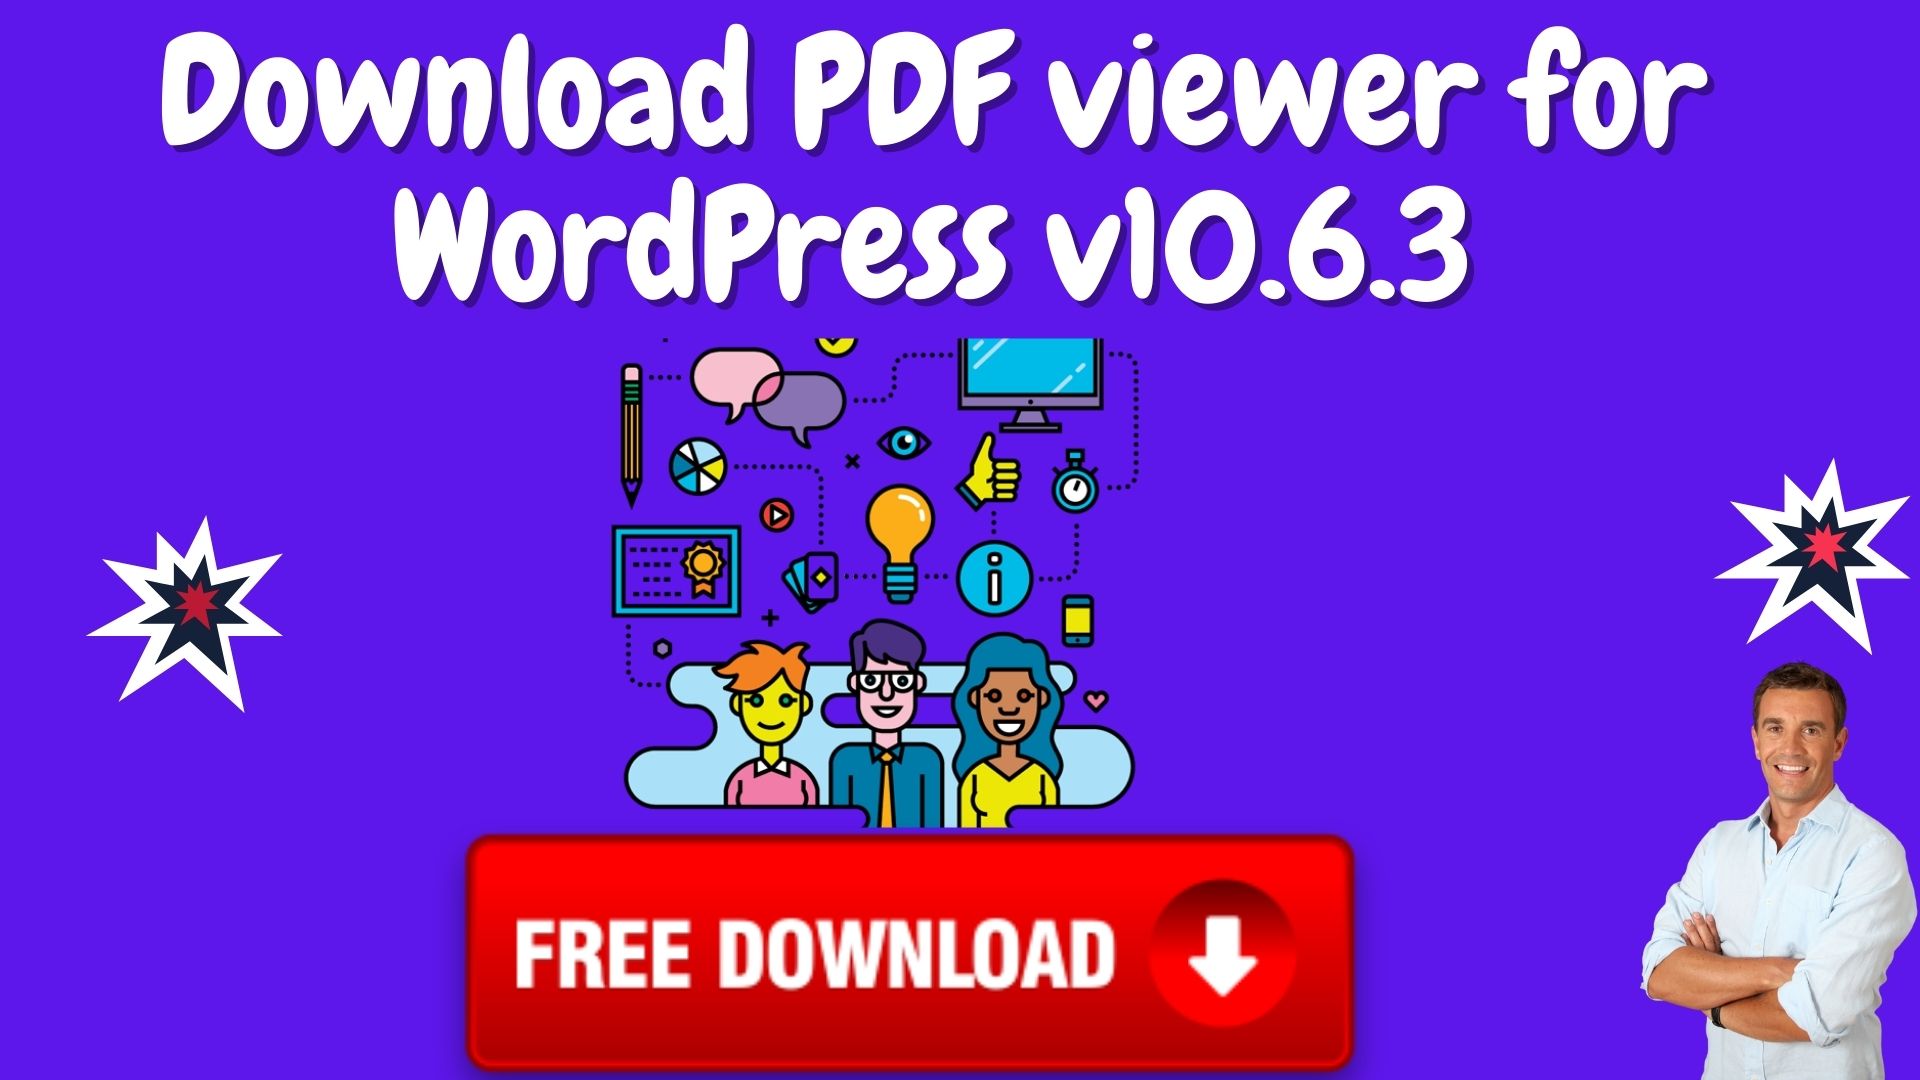 Download pdf viewer for wordpress v10. 6. 3